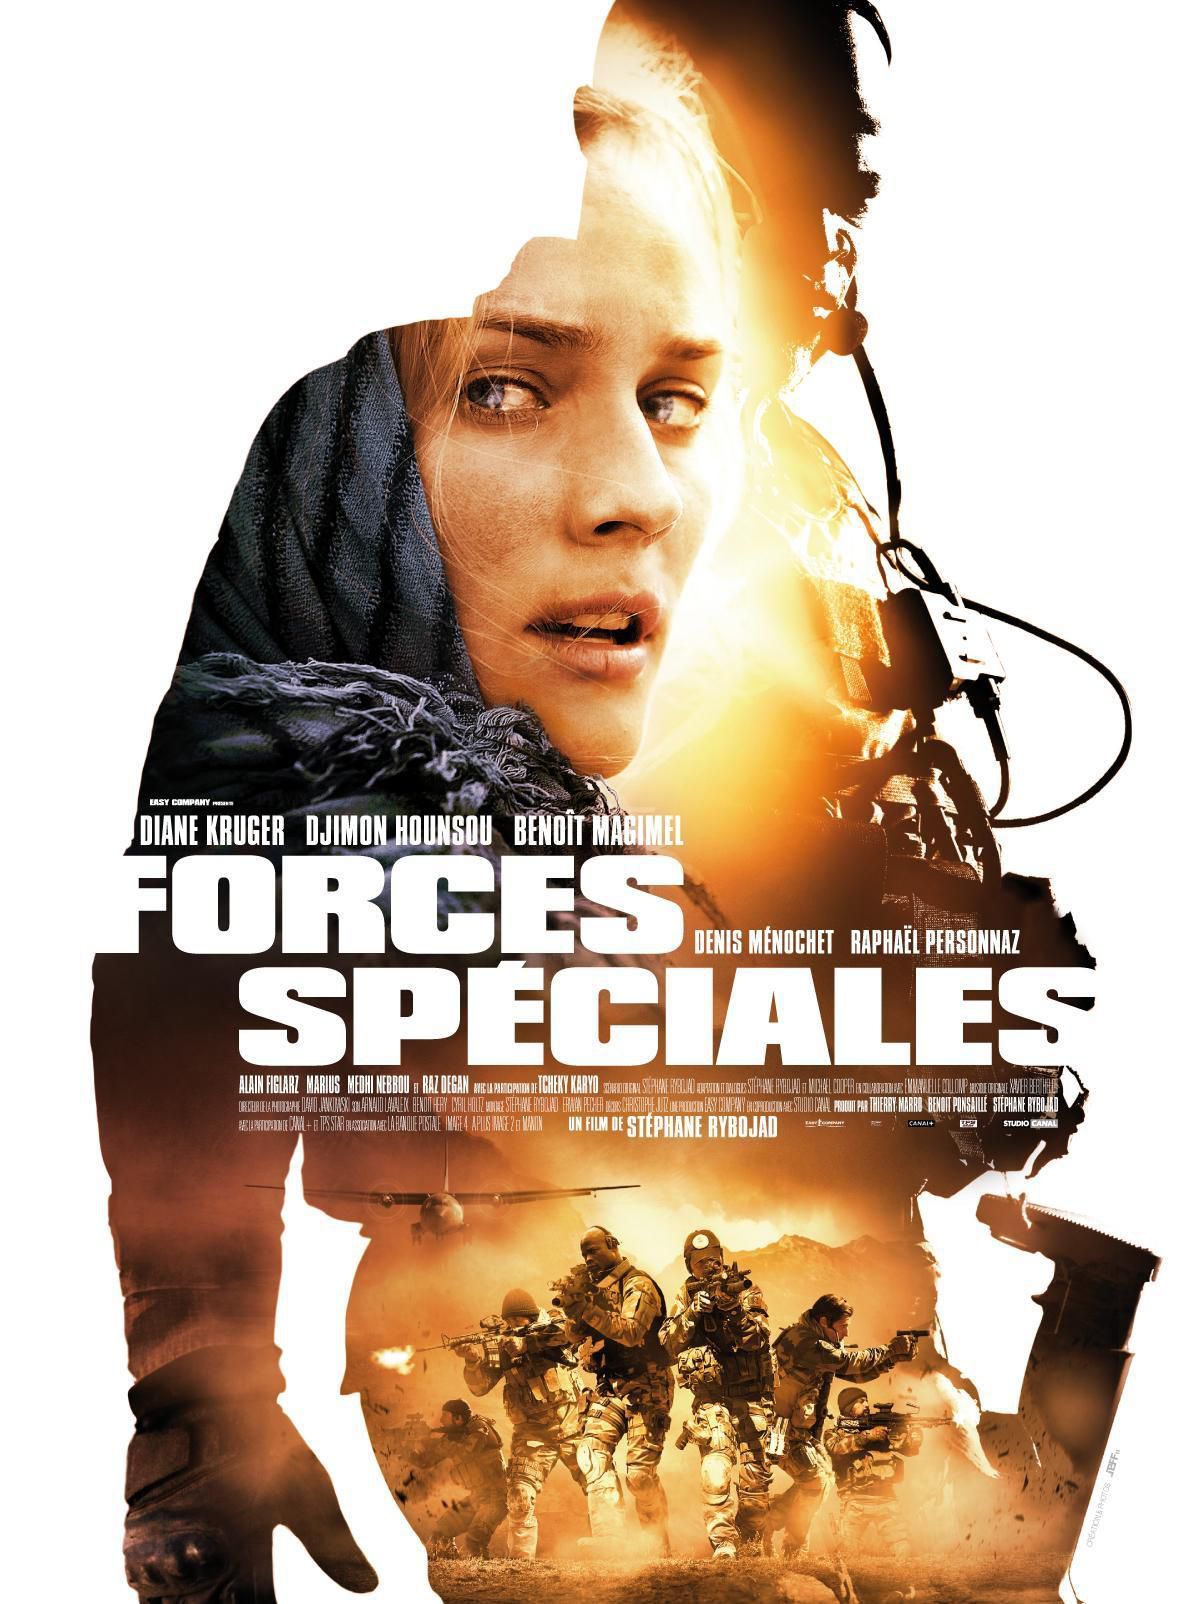 Forces spéciales - Film (2011) streaming VF gratuit complet